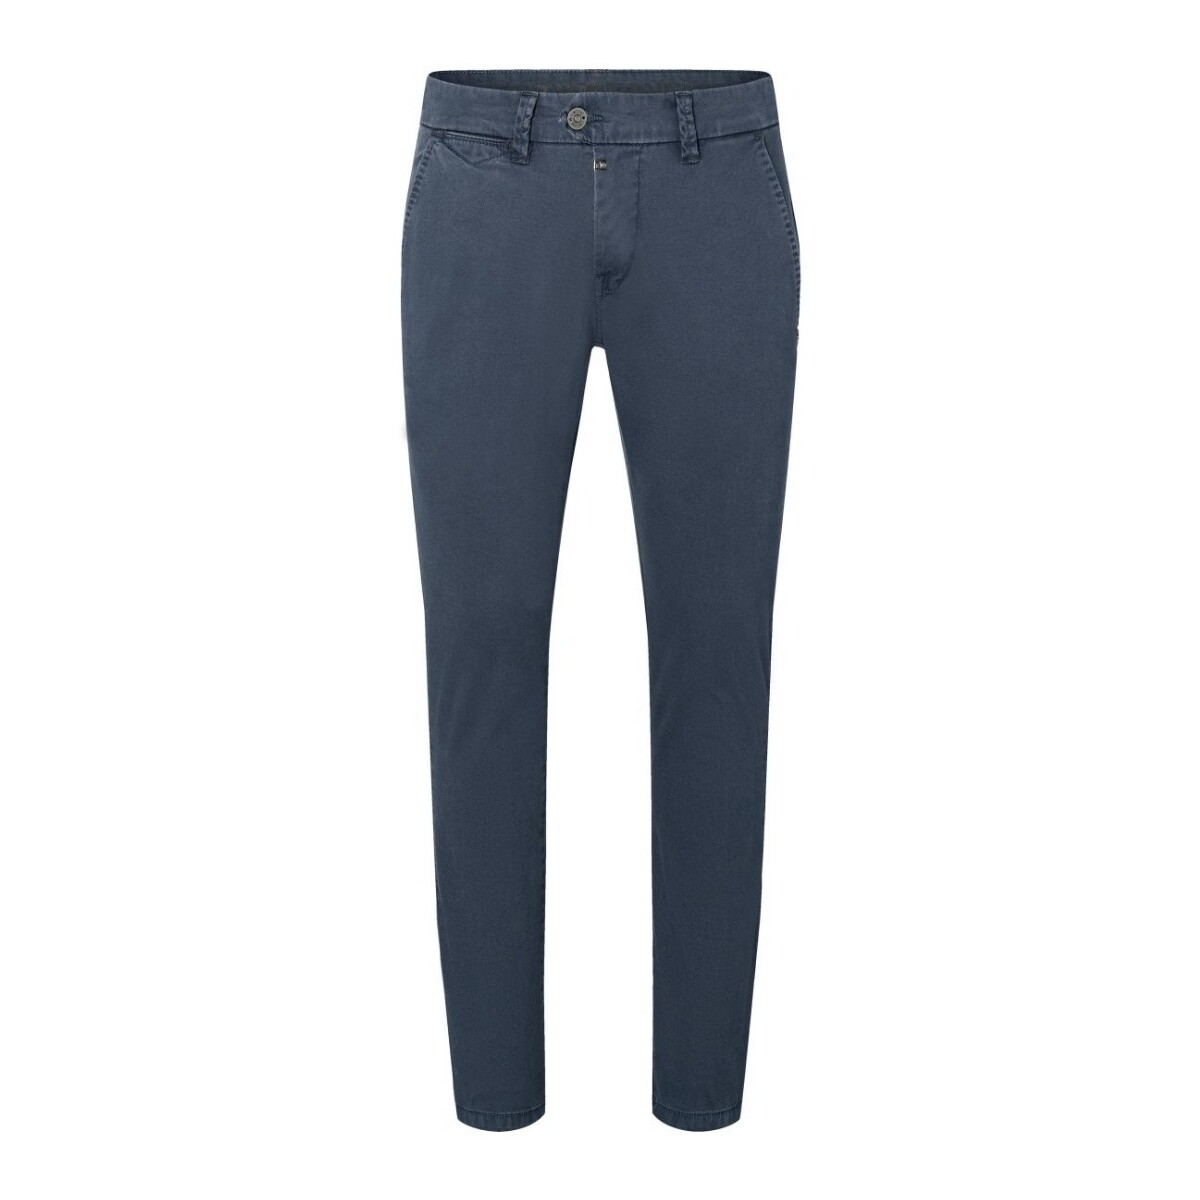 Vêtements Homme Jeans Timezone Pantalon chino  ref 53729 Bleu fonce Bleu